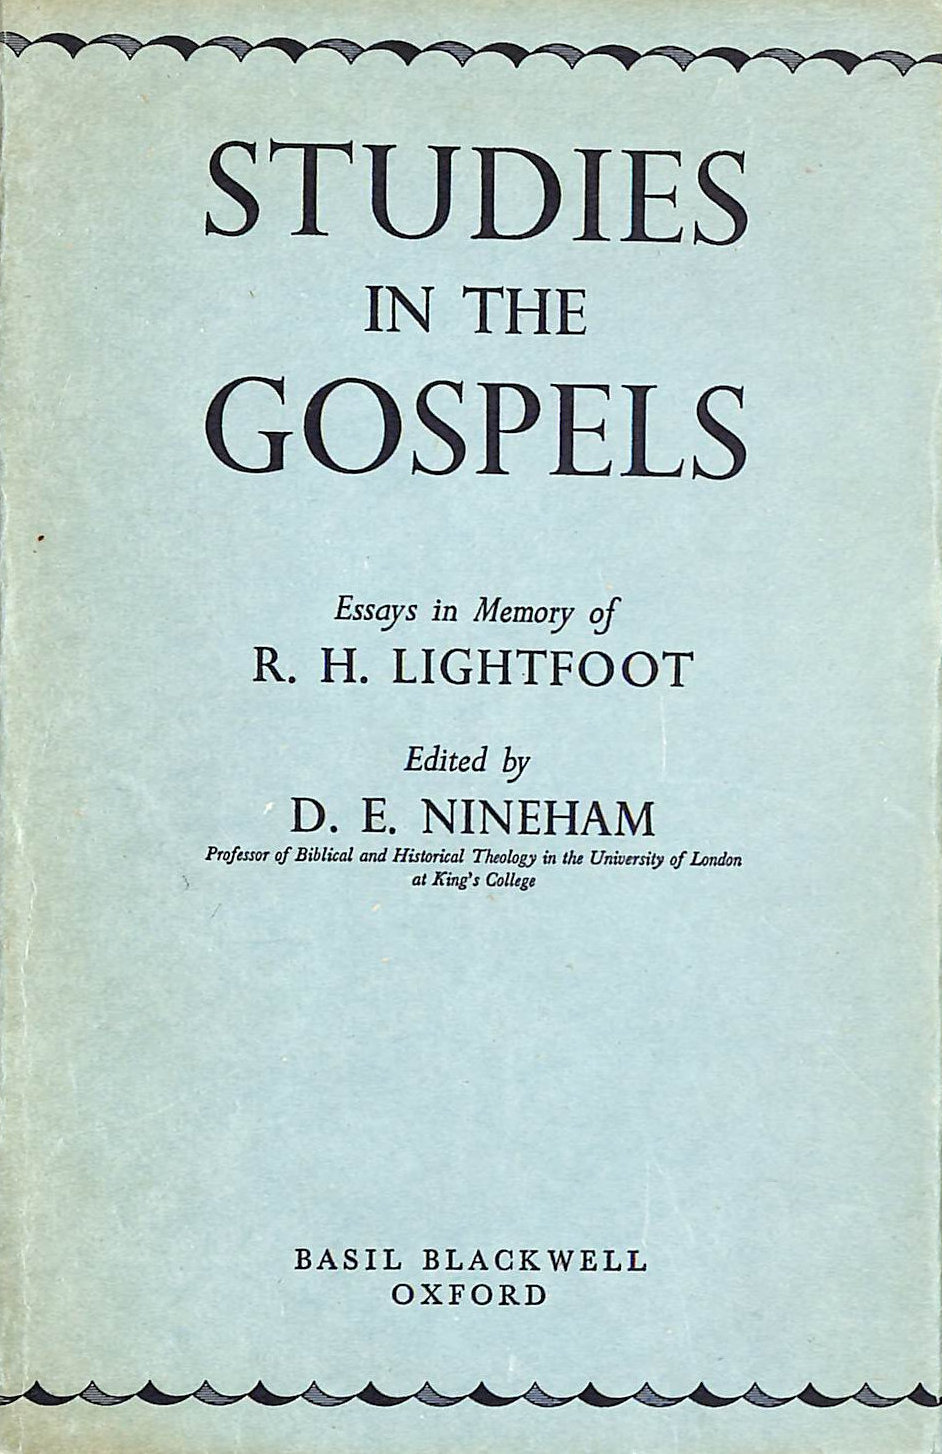 VARIOUS - Studies in the Gospels. Essays in Memory of R H Lightfoot.